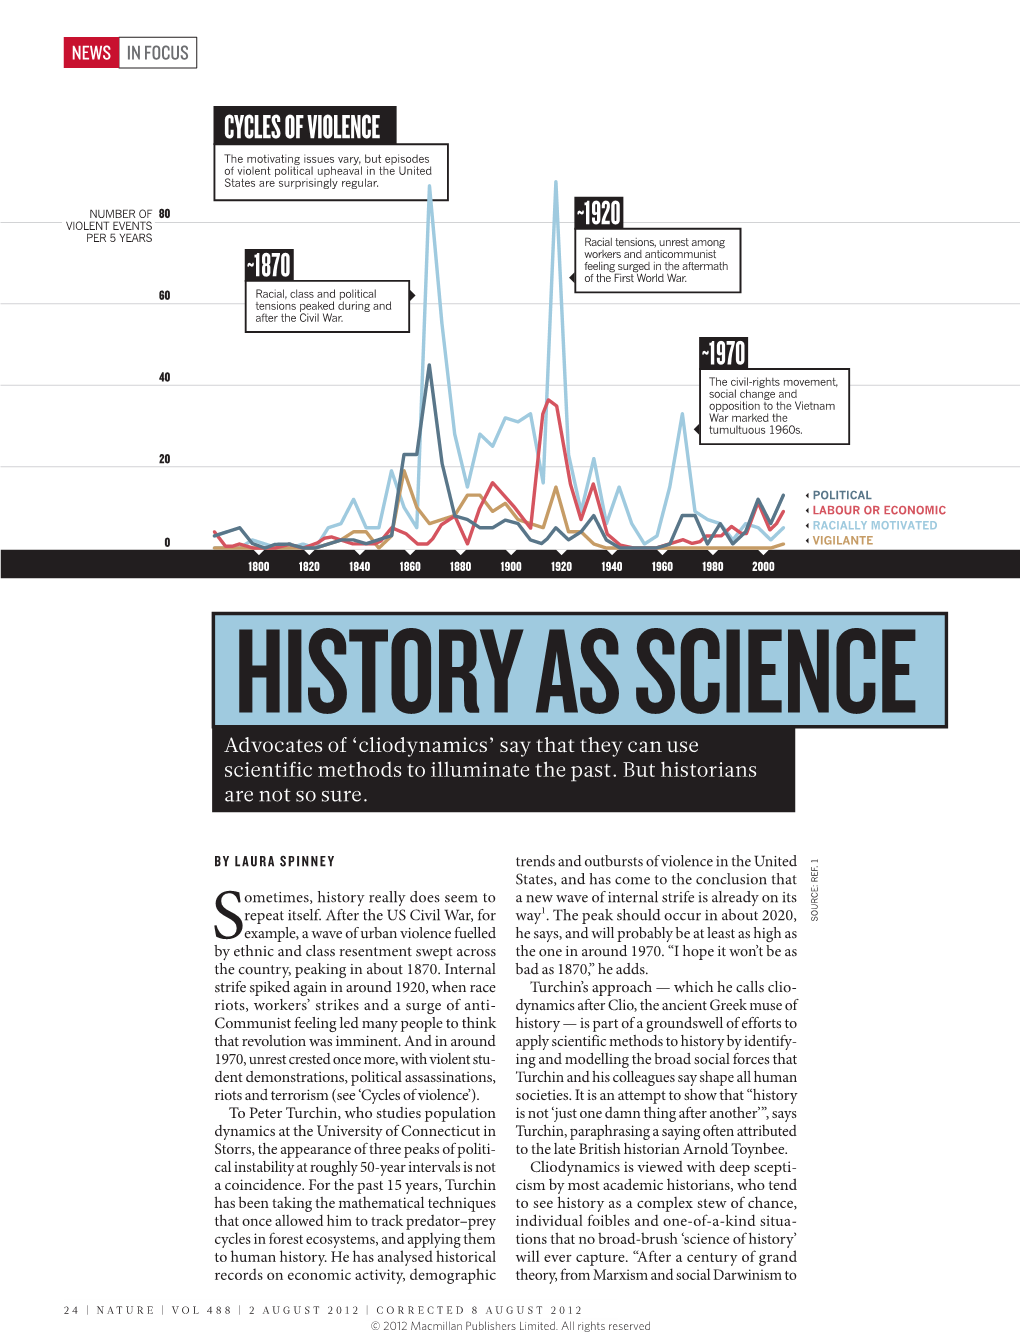 Human Cycles: History As Science